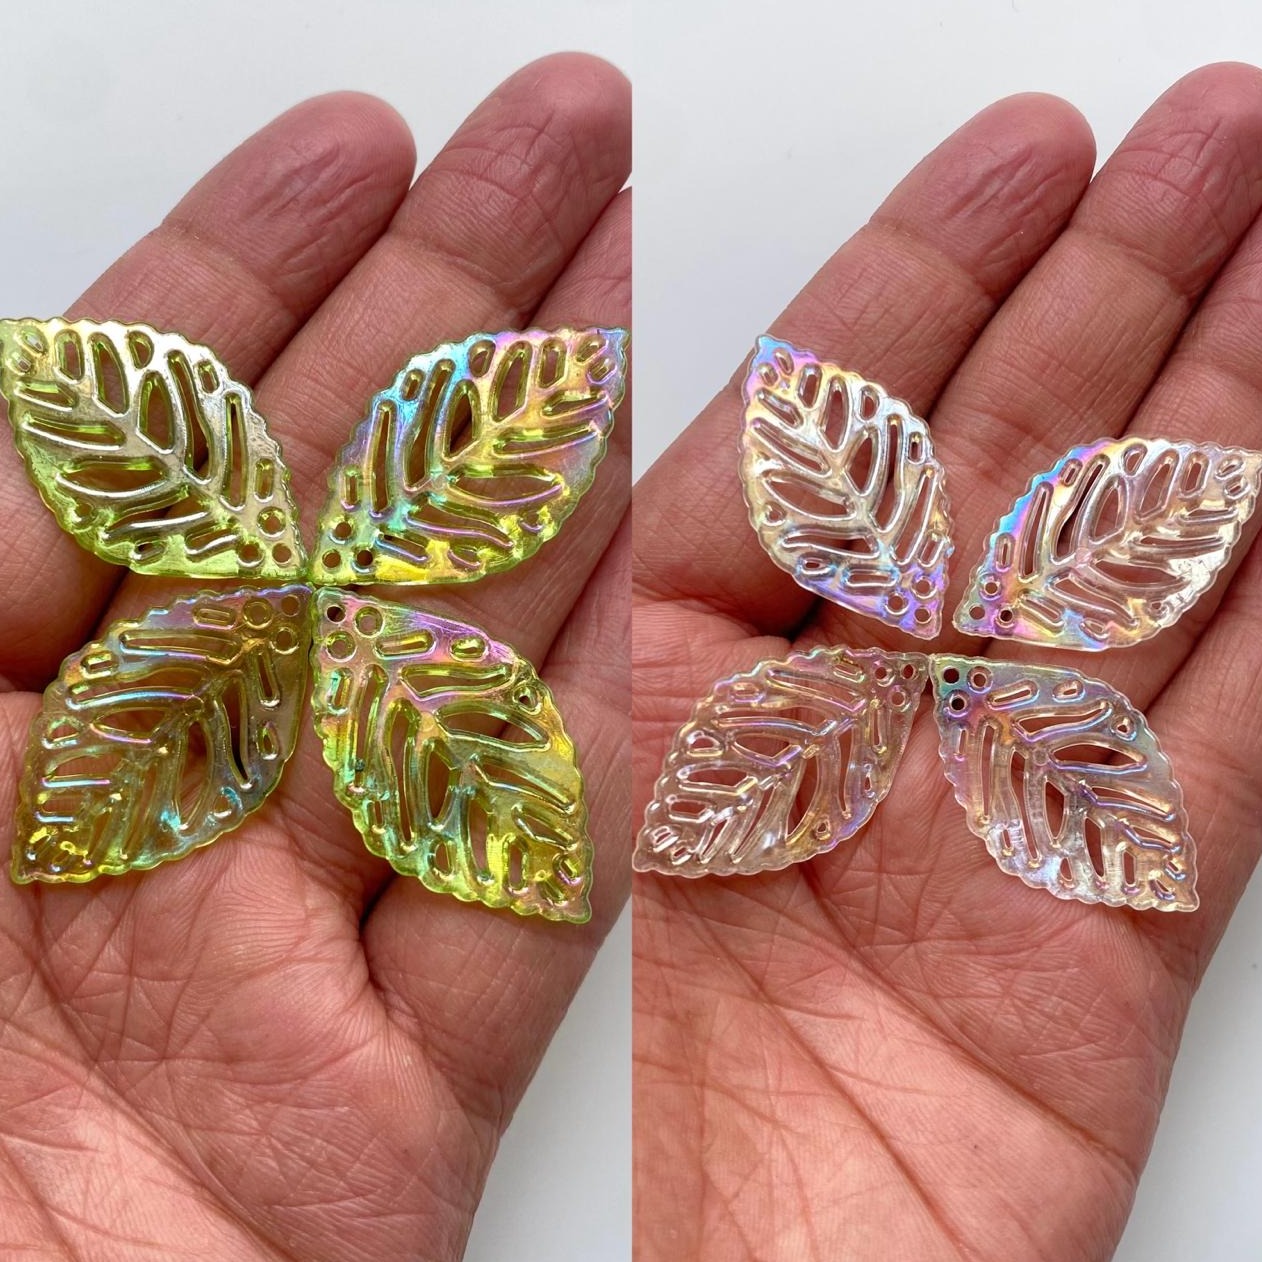 Holo-shine Artificial Acrylic Leaf